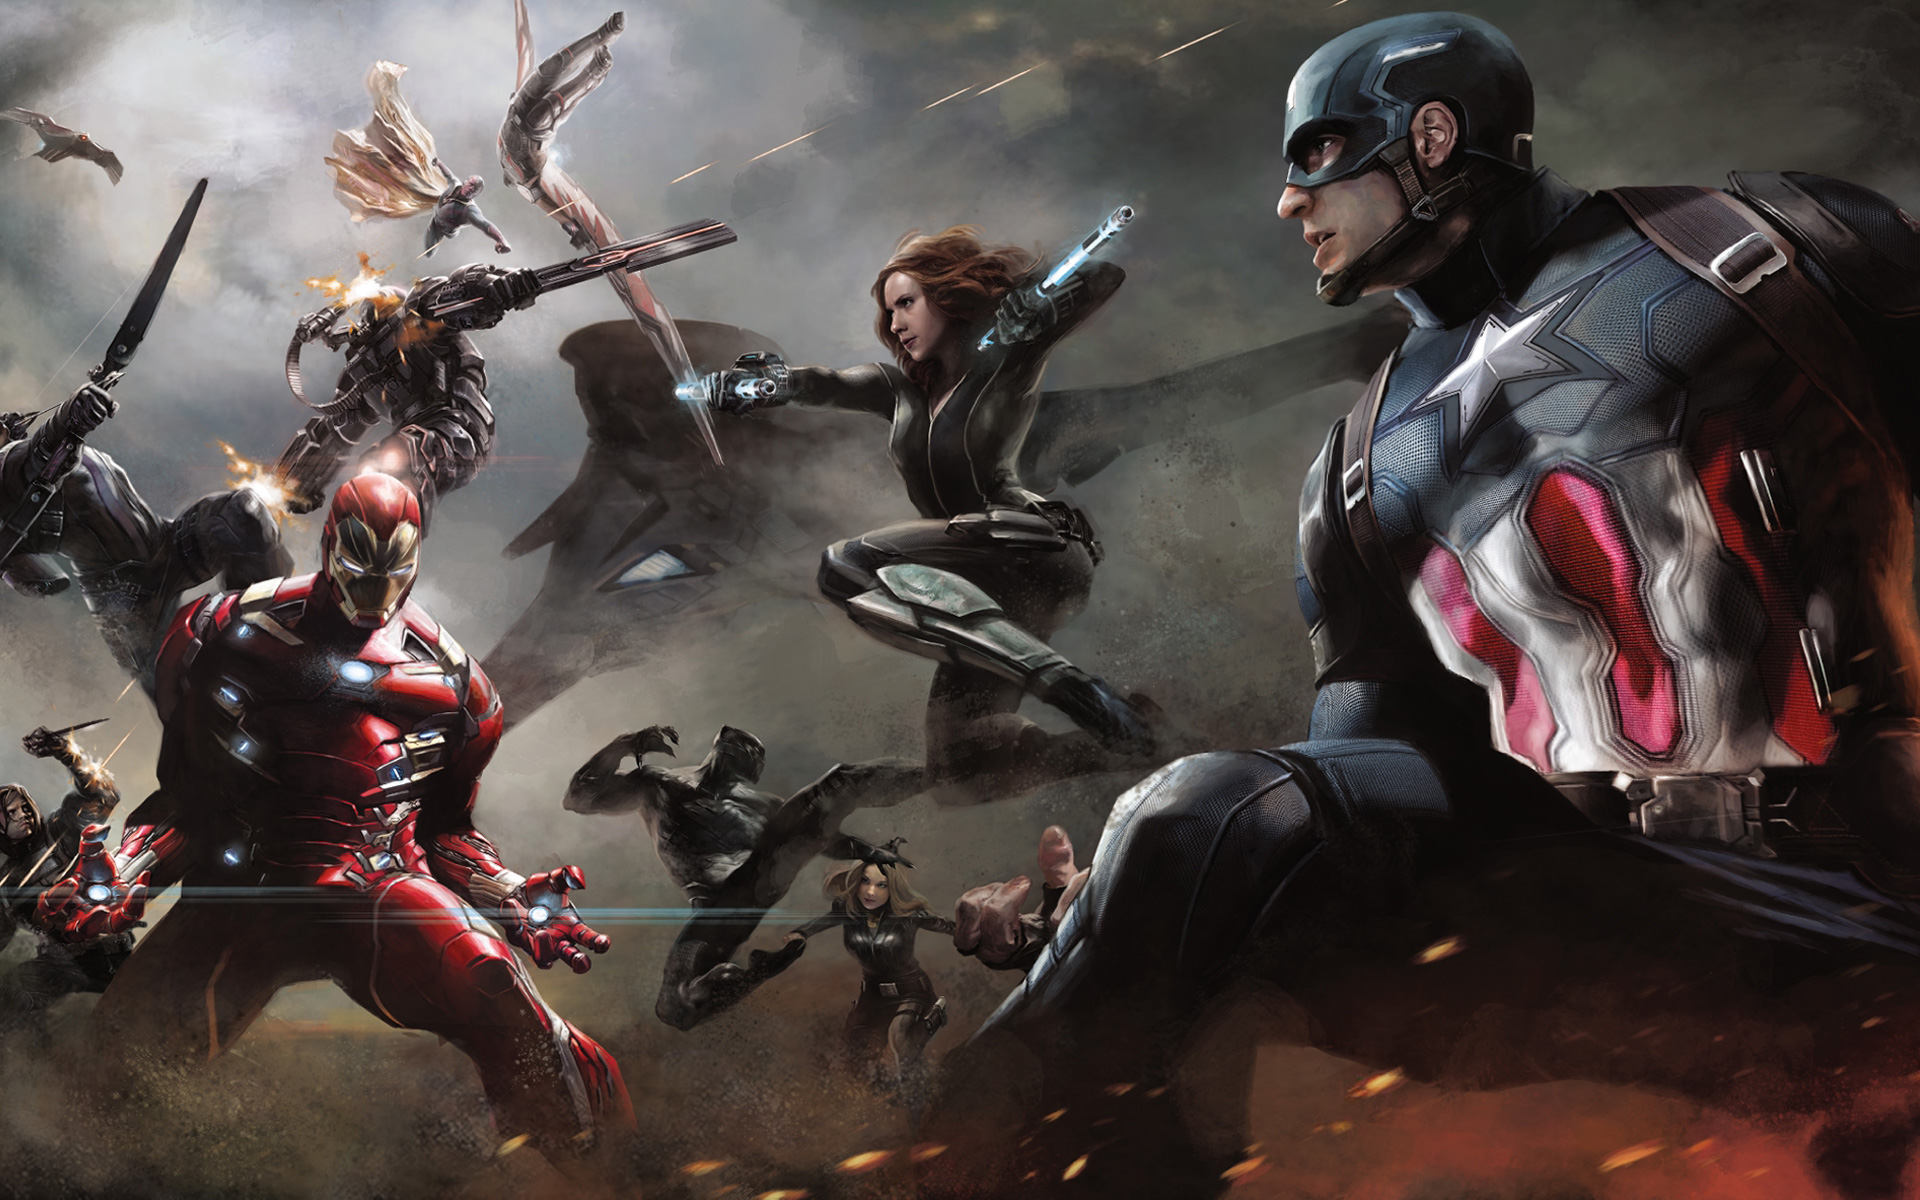 Capitan America Civil War - HD Wallpaper 